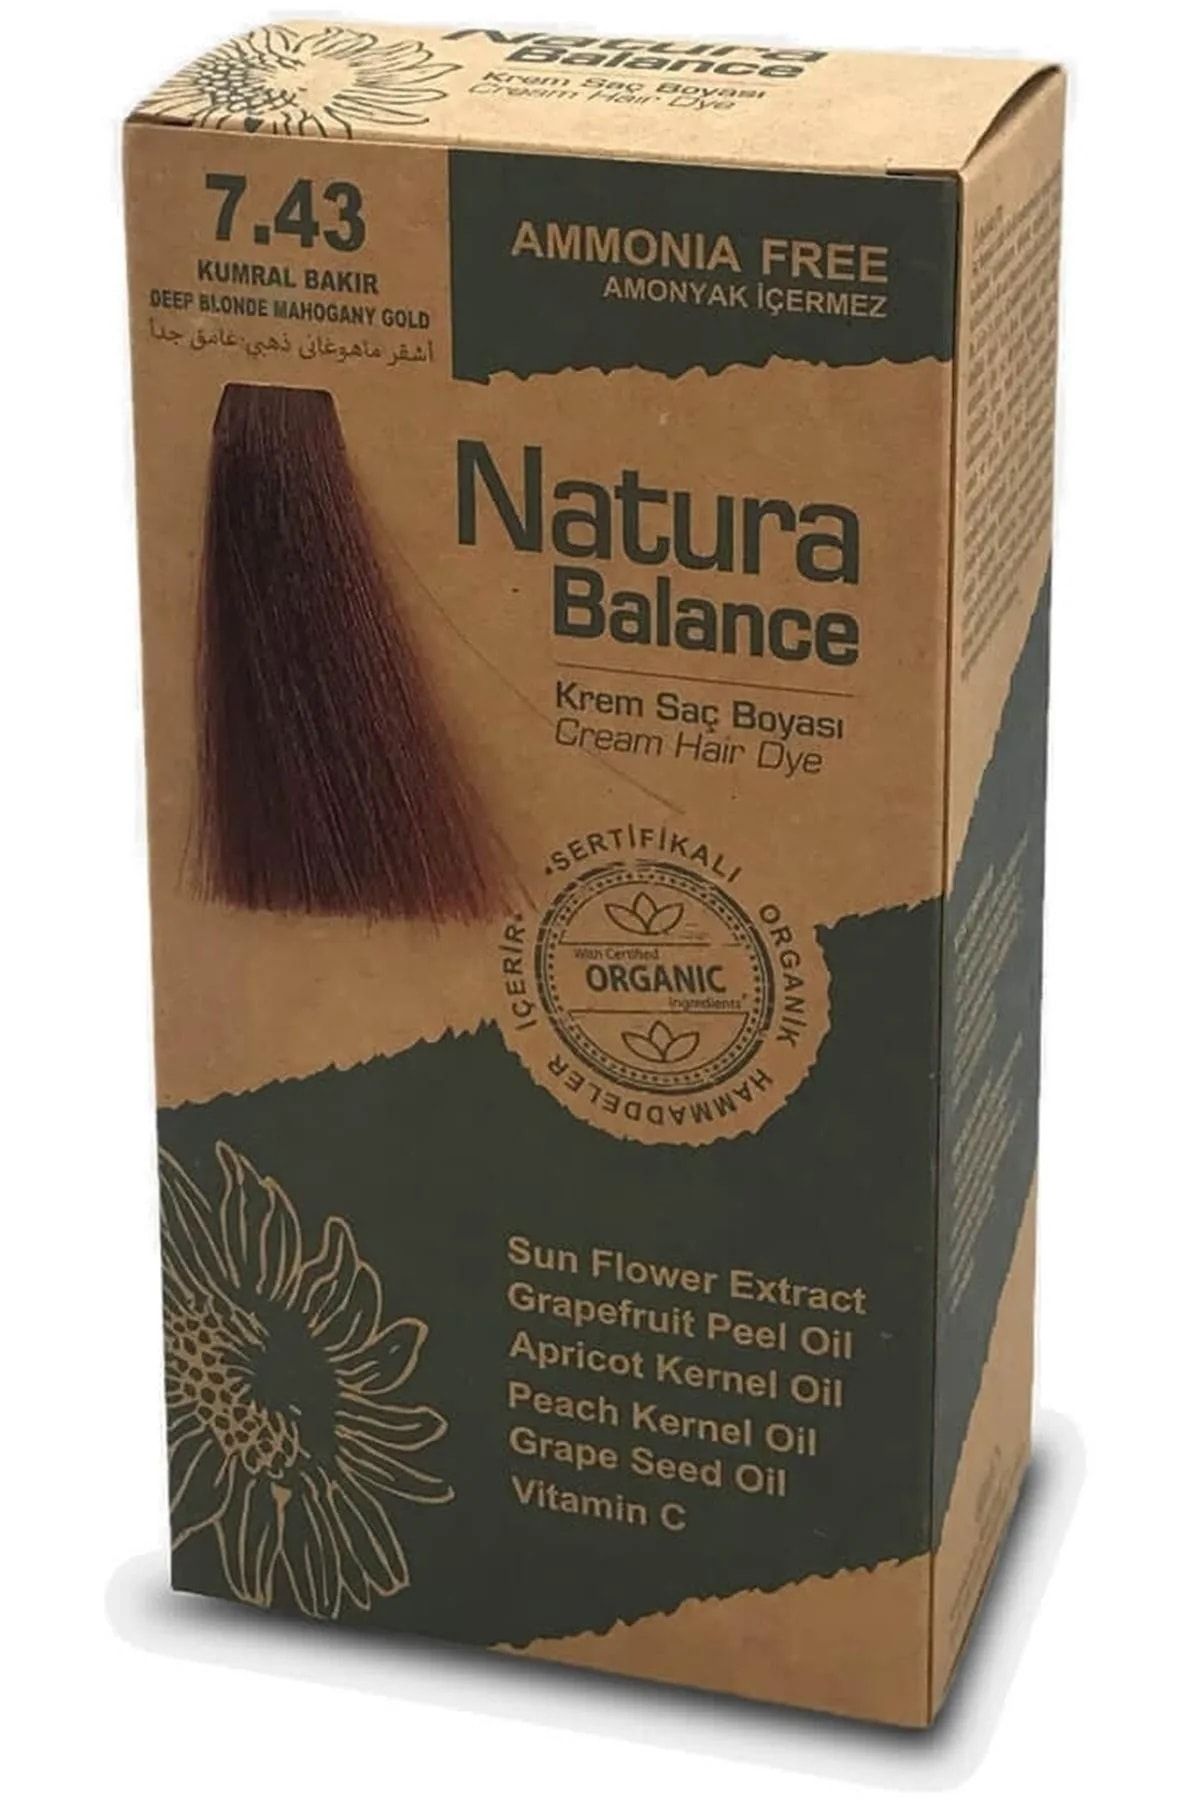 NATURABALANCE Natura Balance 7.43 Kumral Bakır Organik Krem Saç Boyası